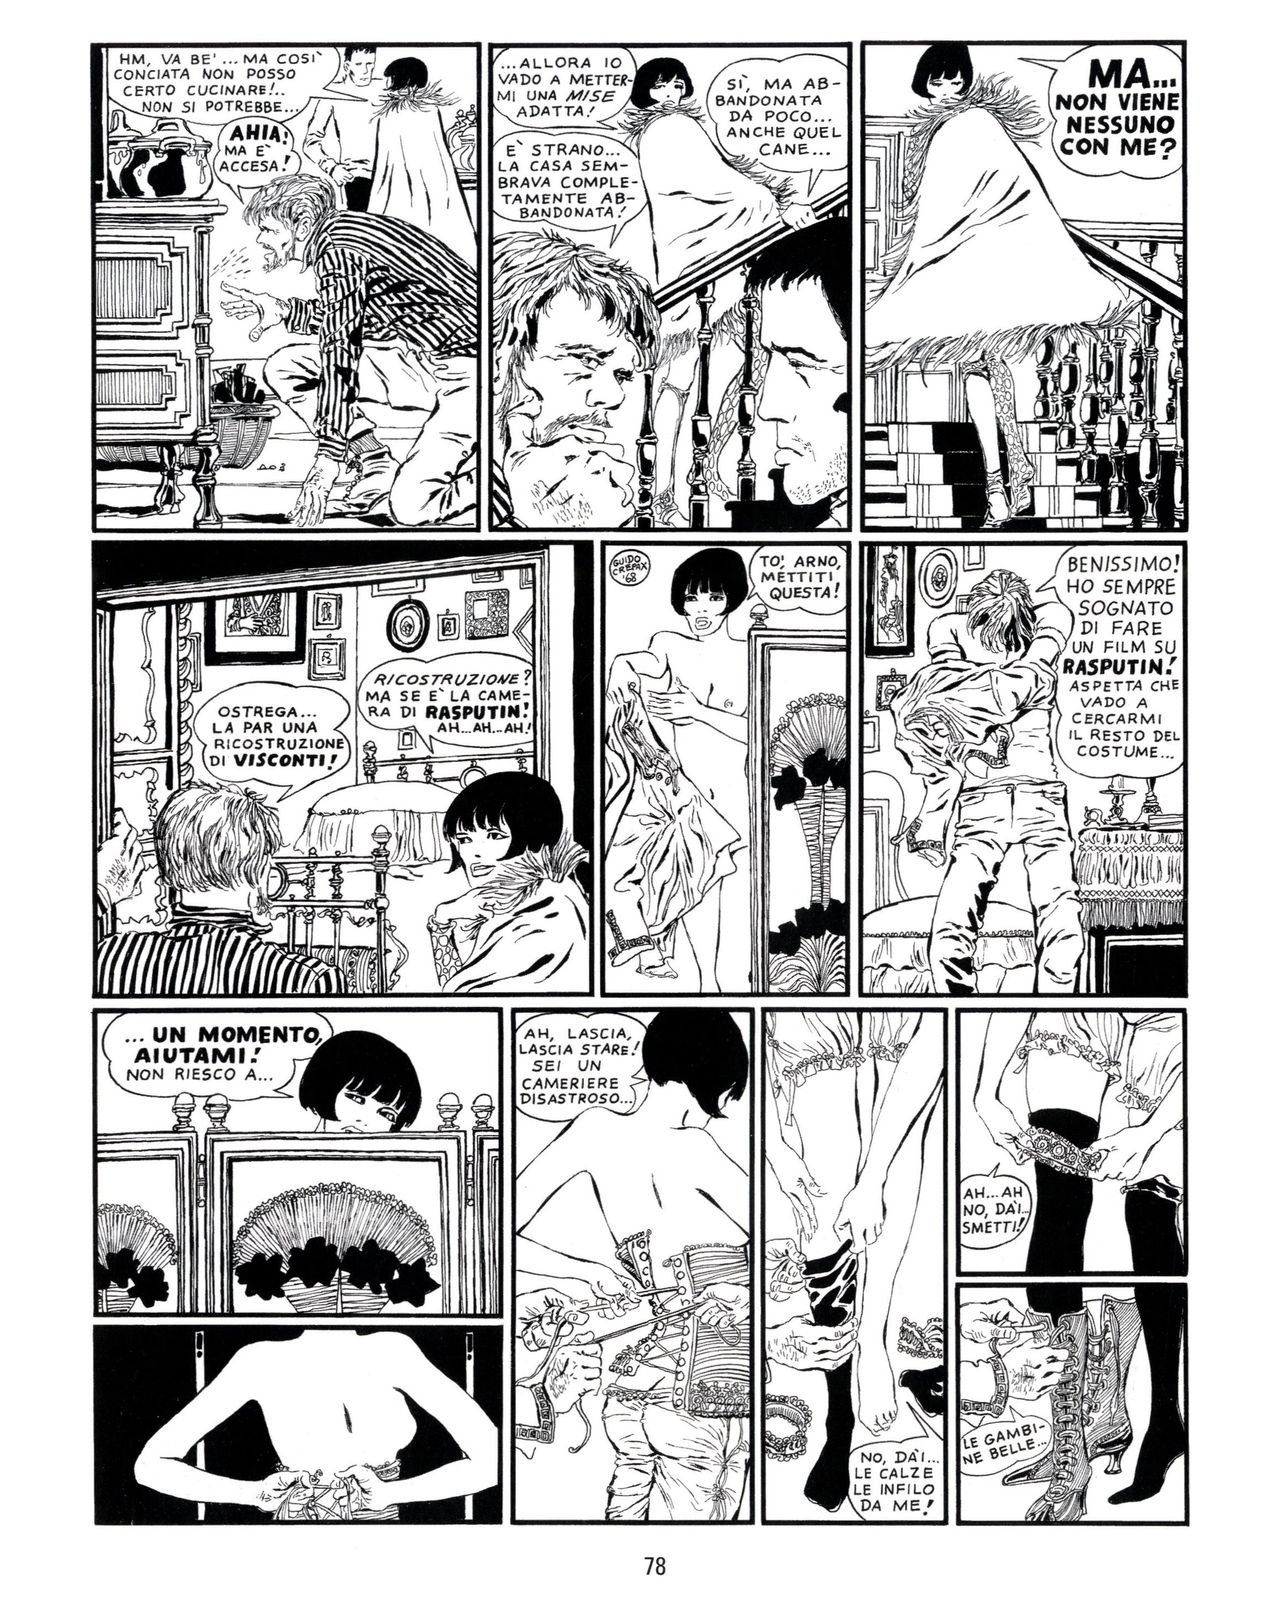 [Guido Crepax] Erotica Fumetti #25 : L'ascesa dei sotterranei : I cavalieri ciechi [Italian] 79